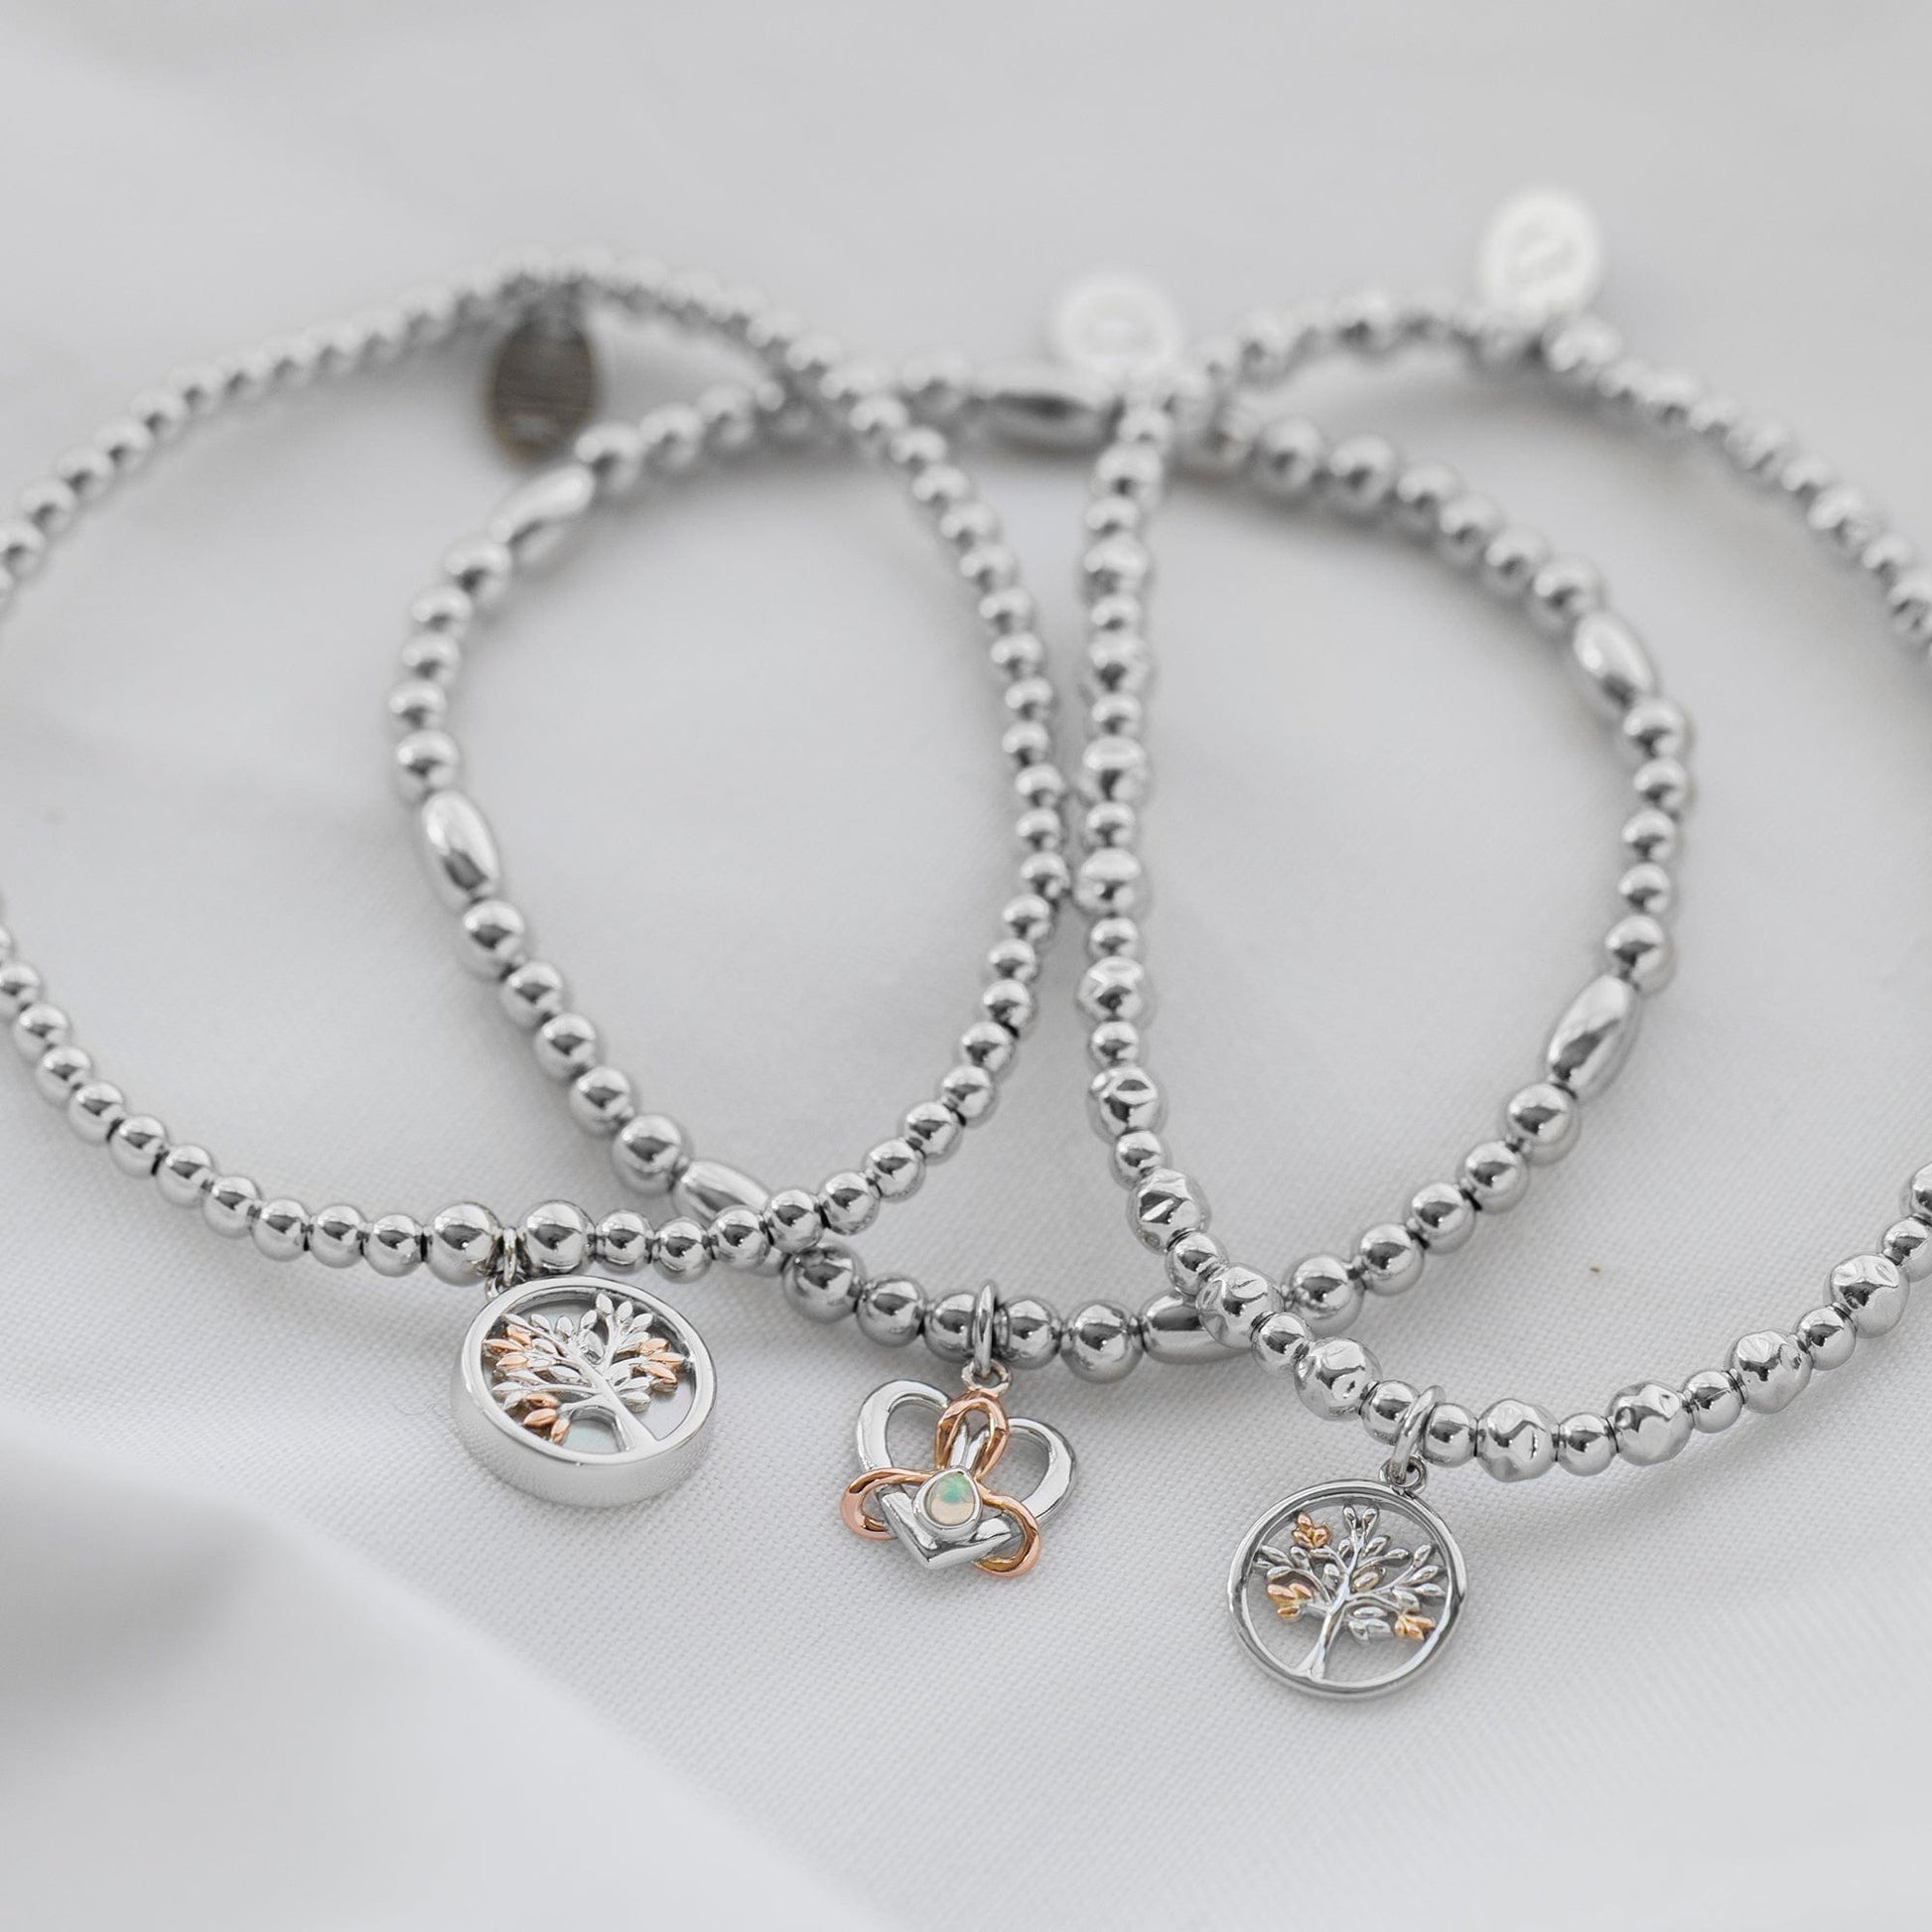 Dwynwen Silver and Opal Affinity Bracelet